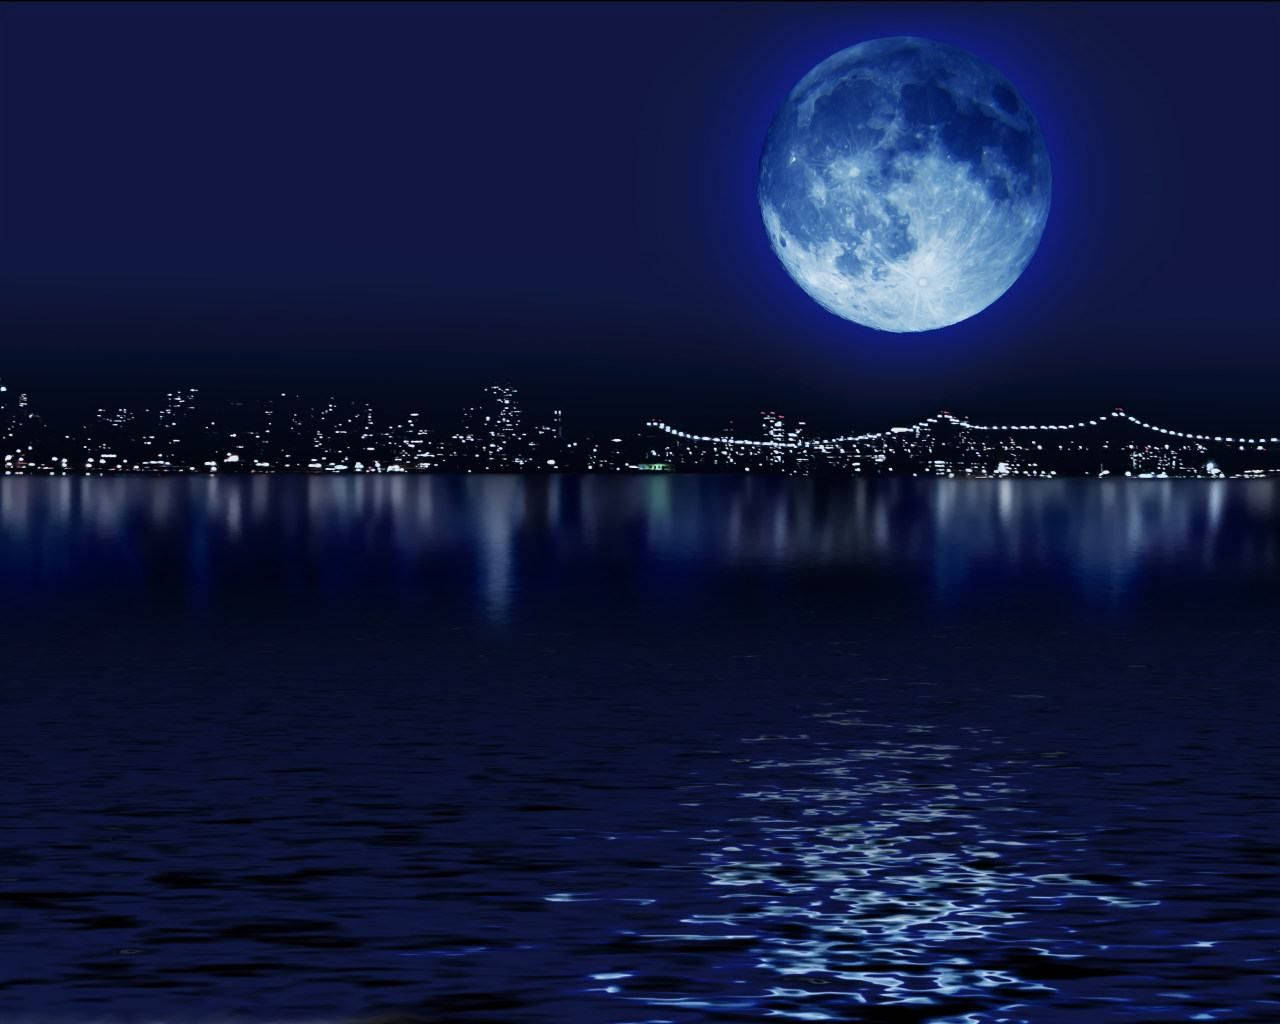 Dark Night Full Moon Over City Background